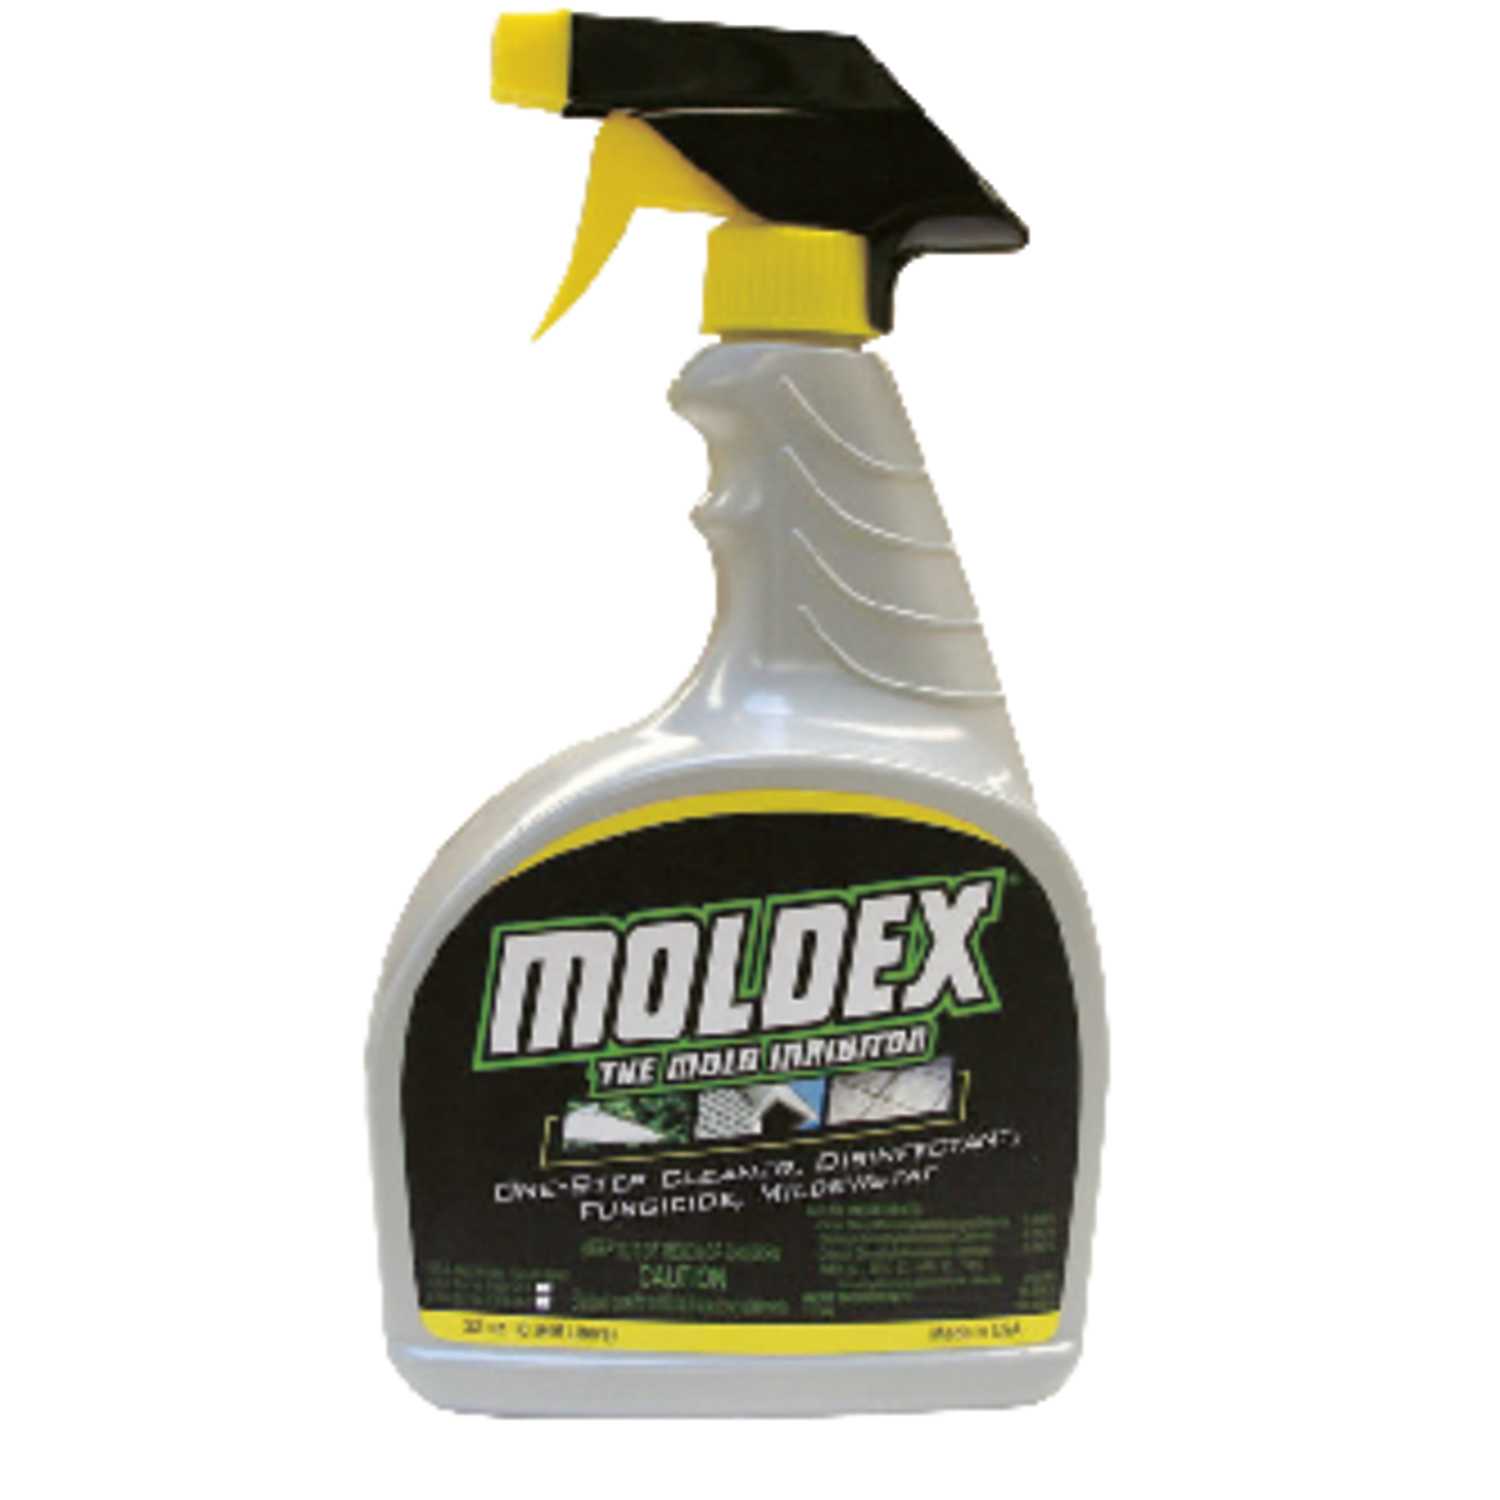 Moldex Mold Killer No Scent Disinfectant  Spray  32 oz 